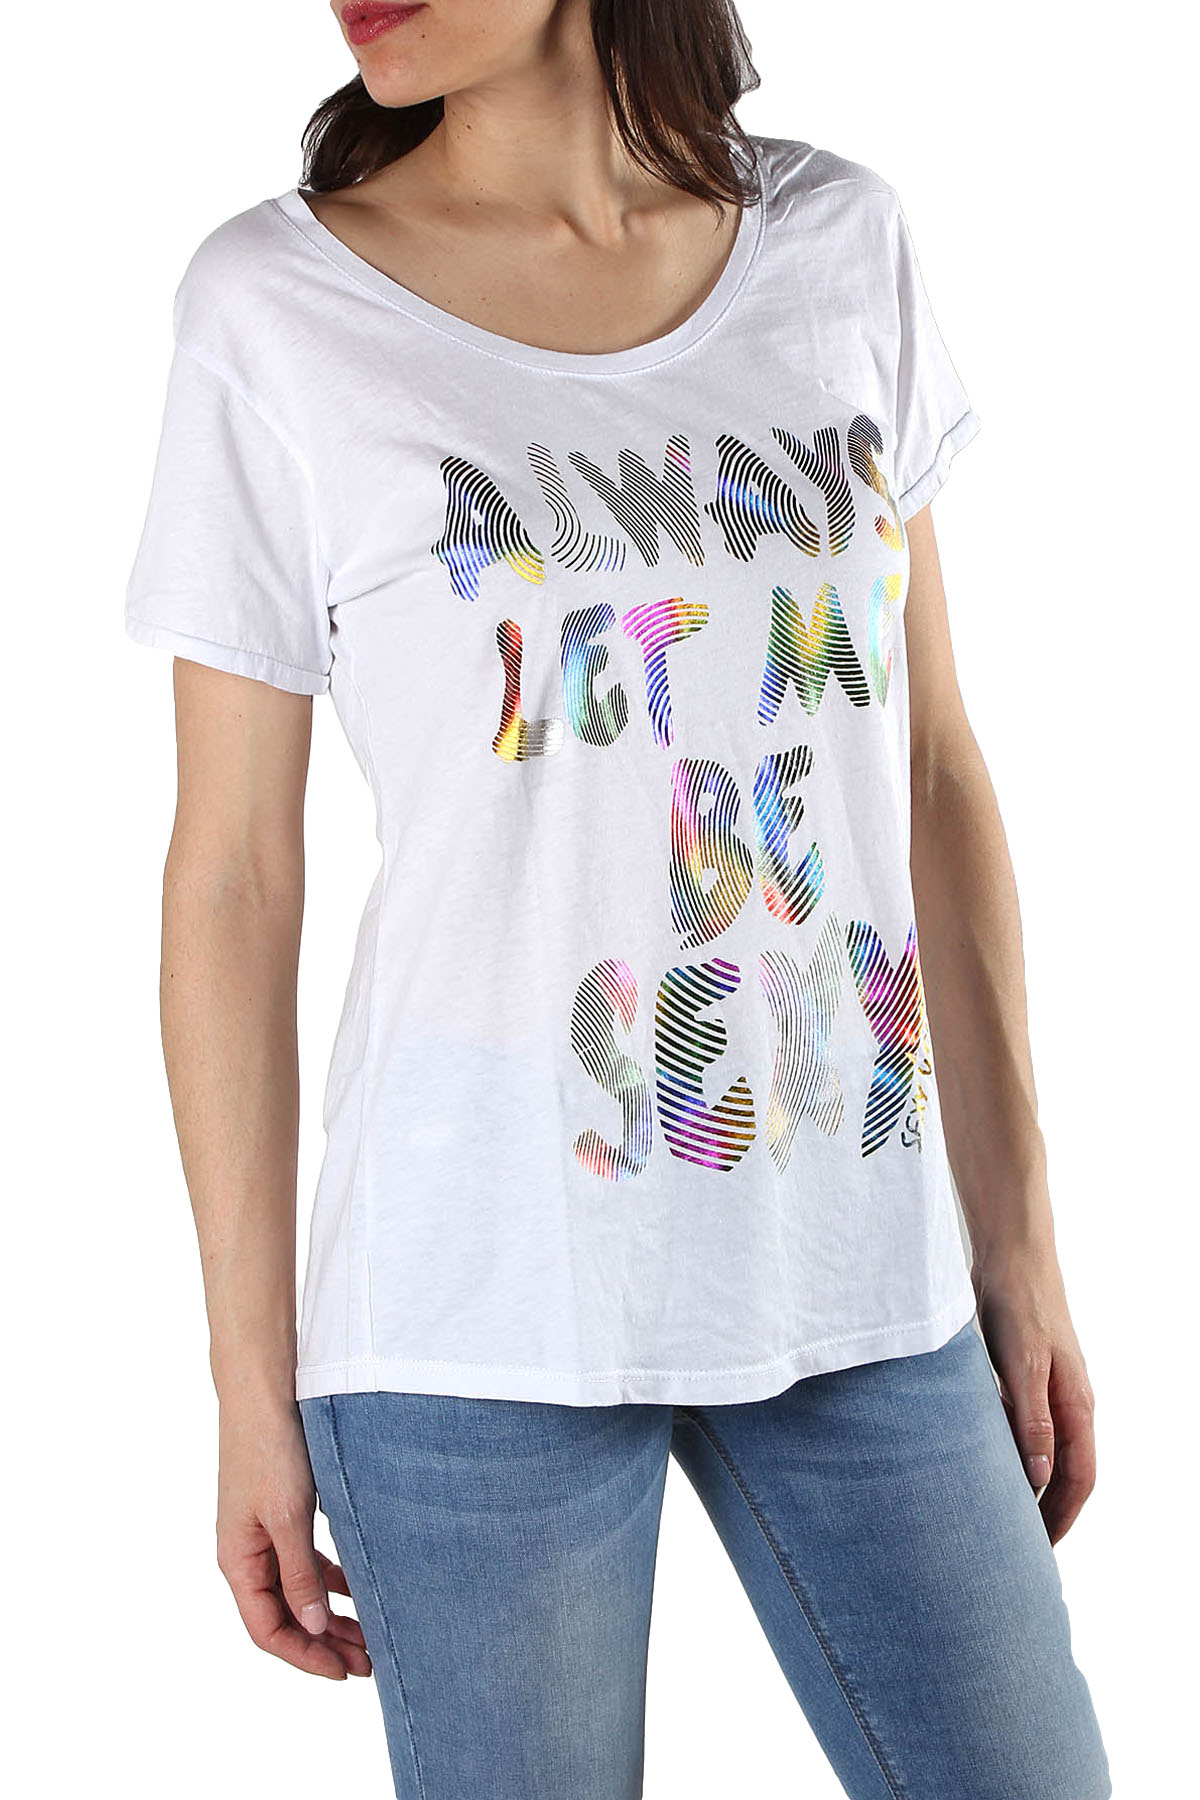 sexy woman - t-shirt